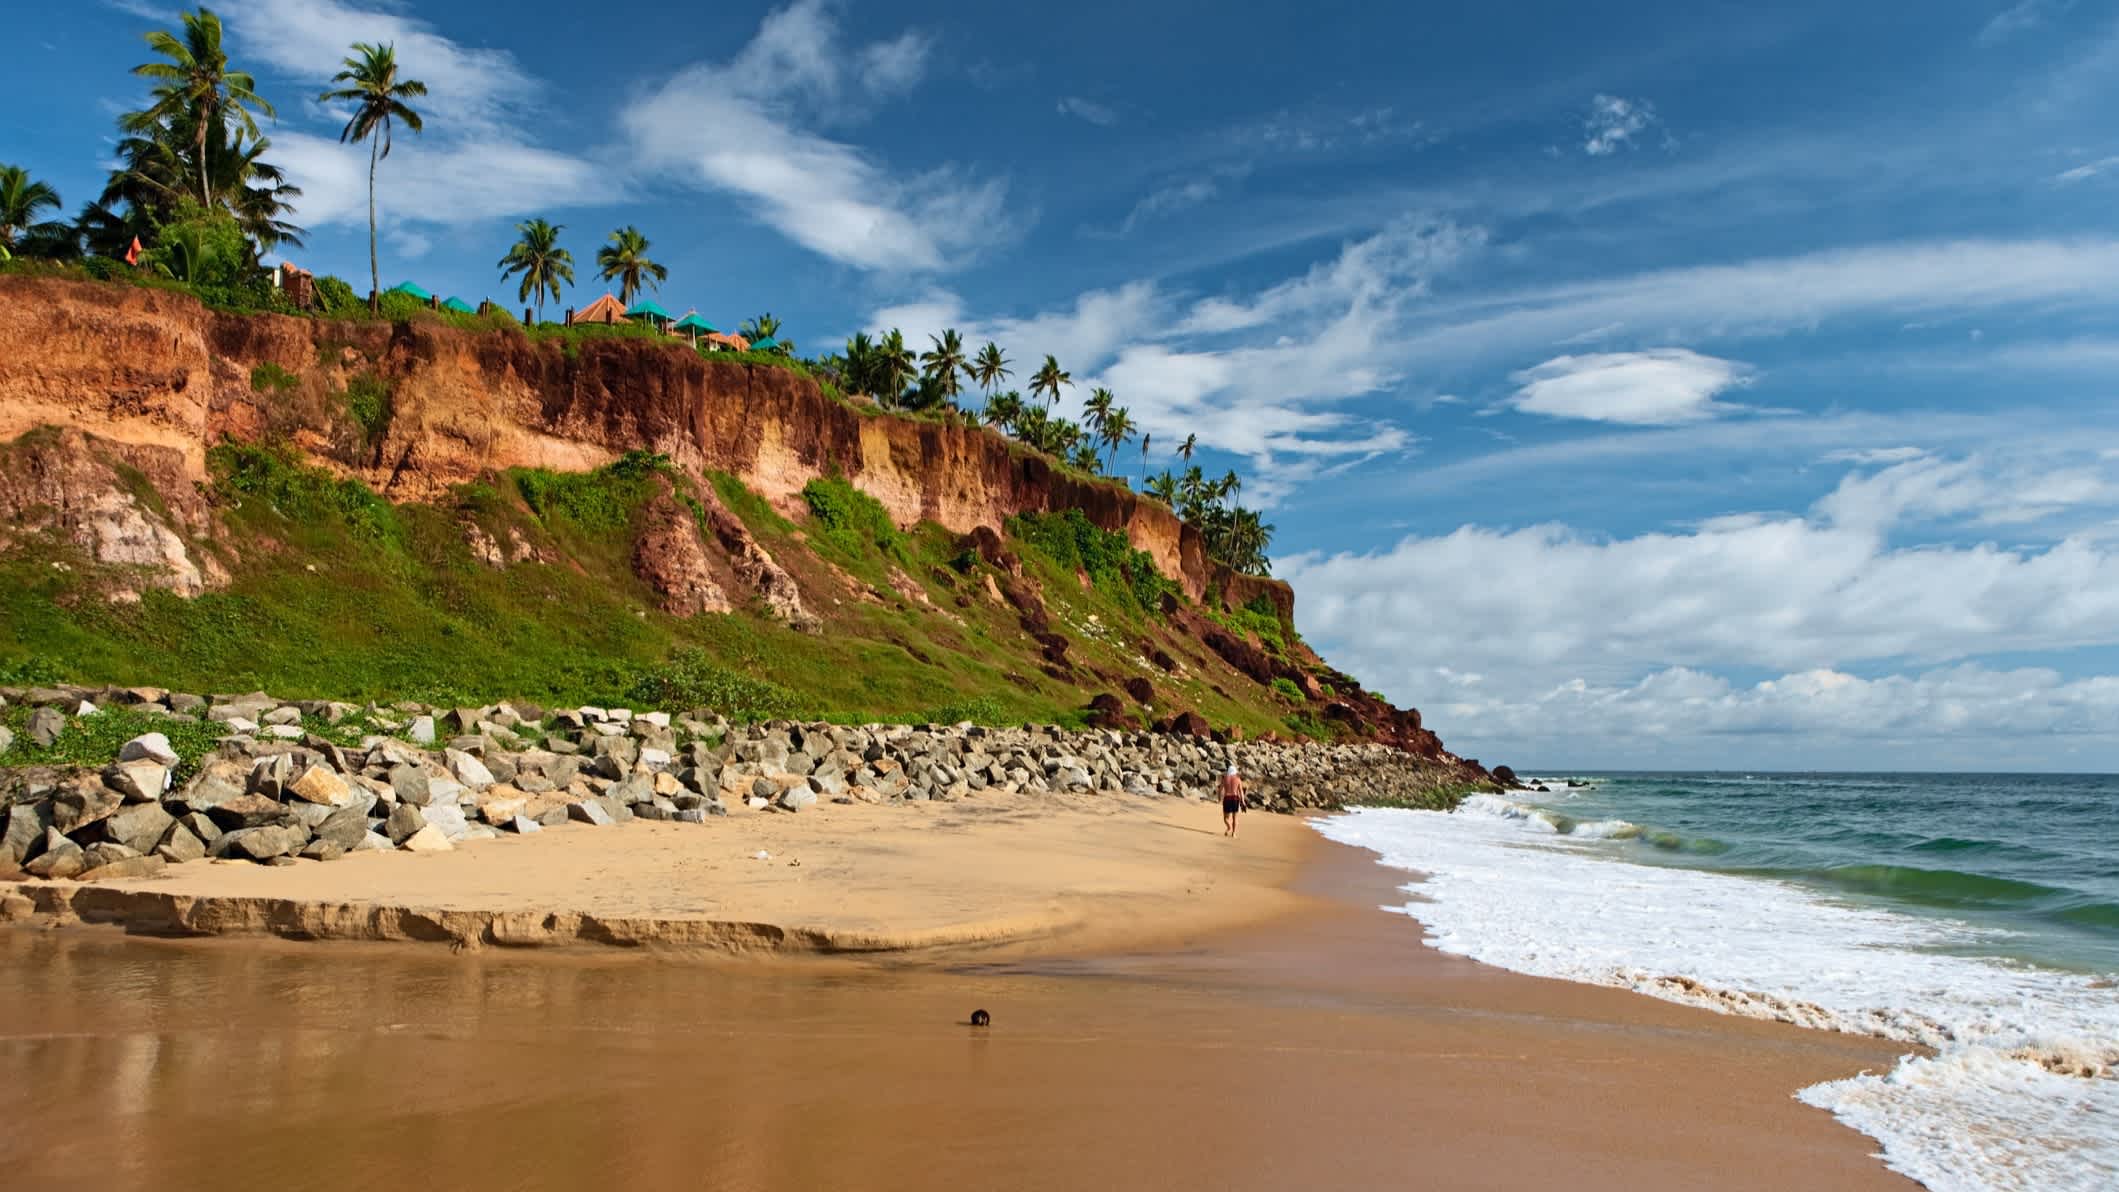 Klippen am naturbelassenen Sandstrand Varkala Beach, Kerala, Indien mit Palmen und Meer im Bild.